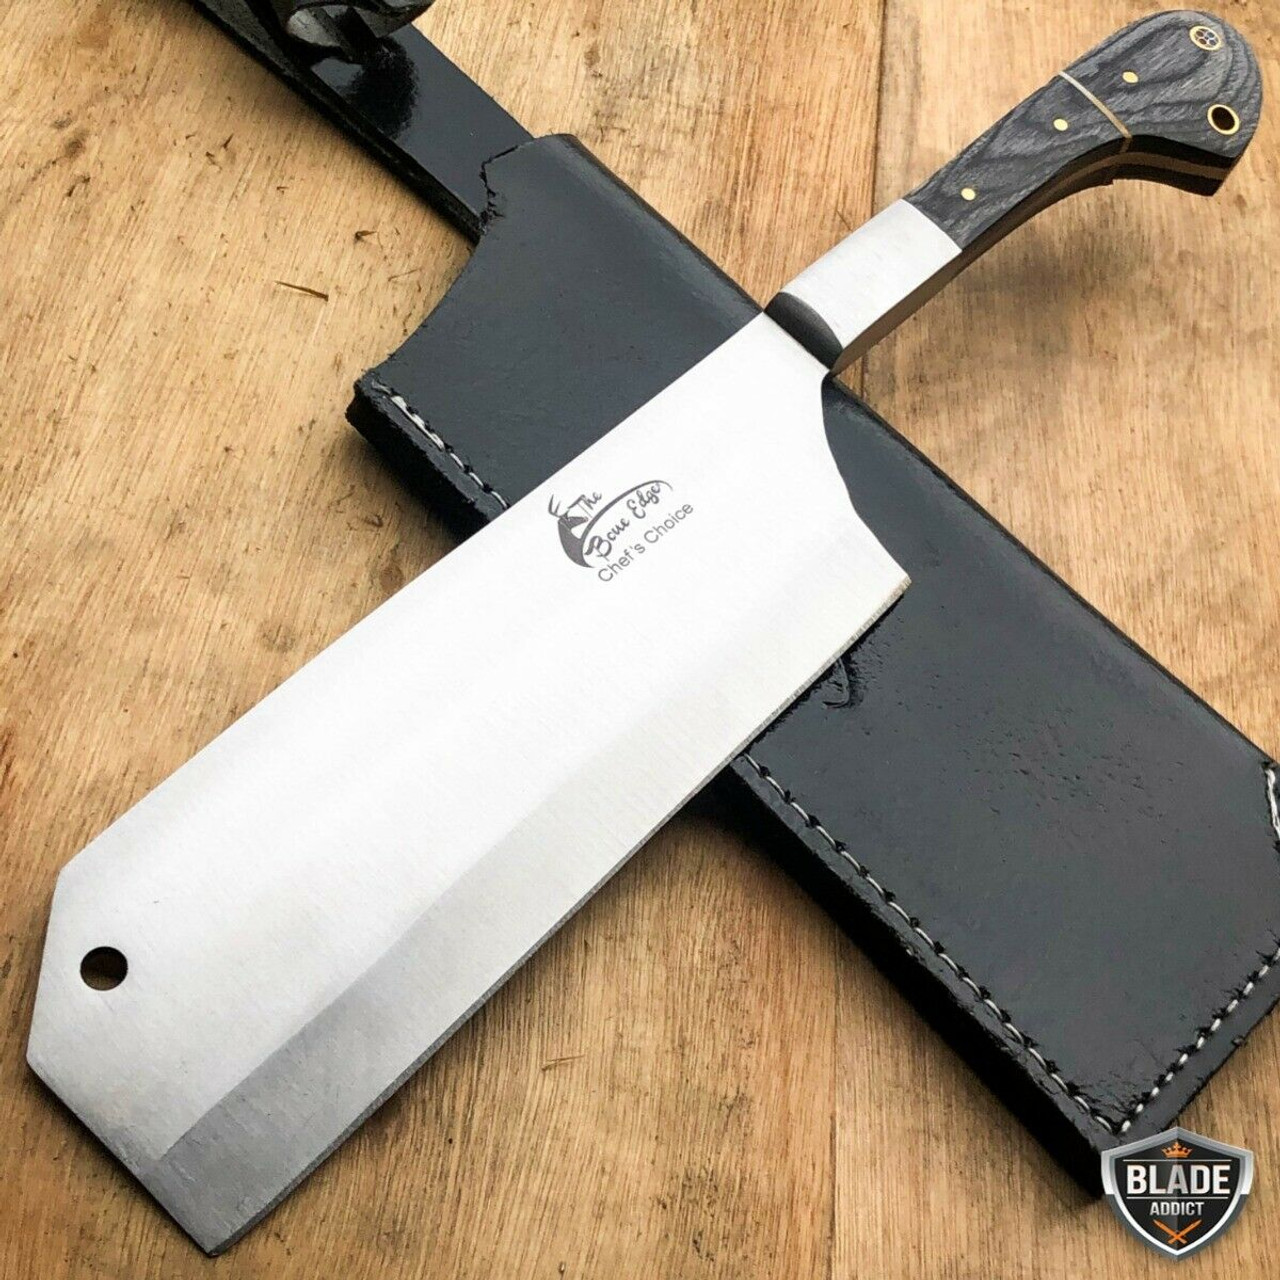  Theexecva Meat Cleaver Knife 8 inch Chopper Butcher